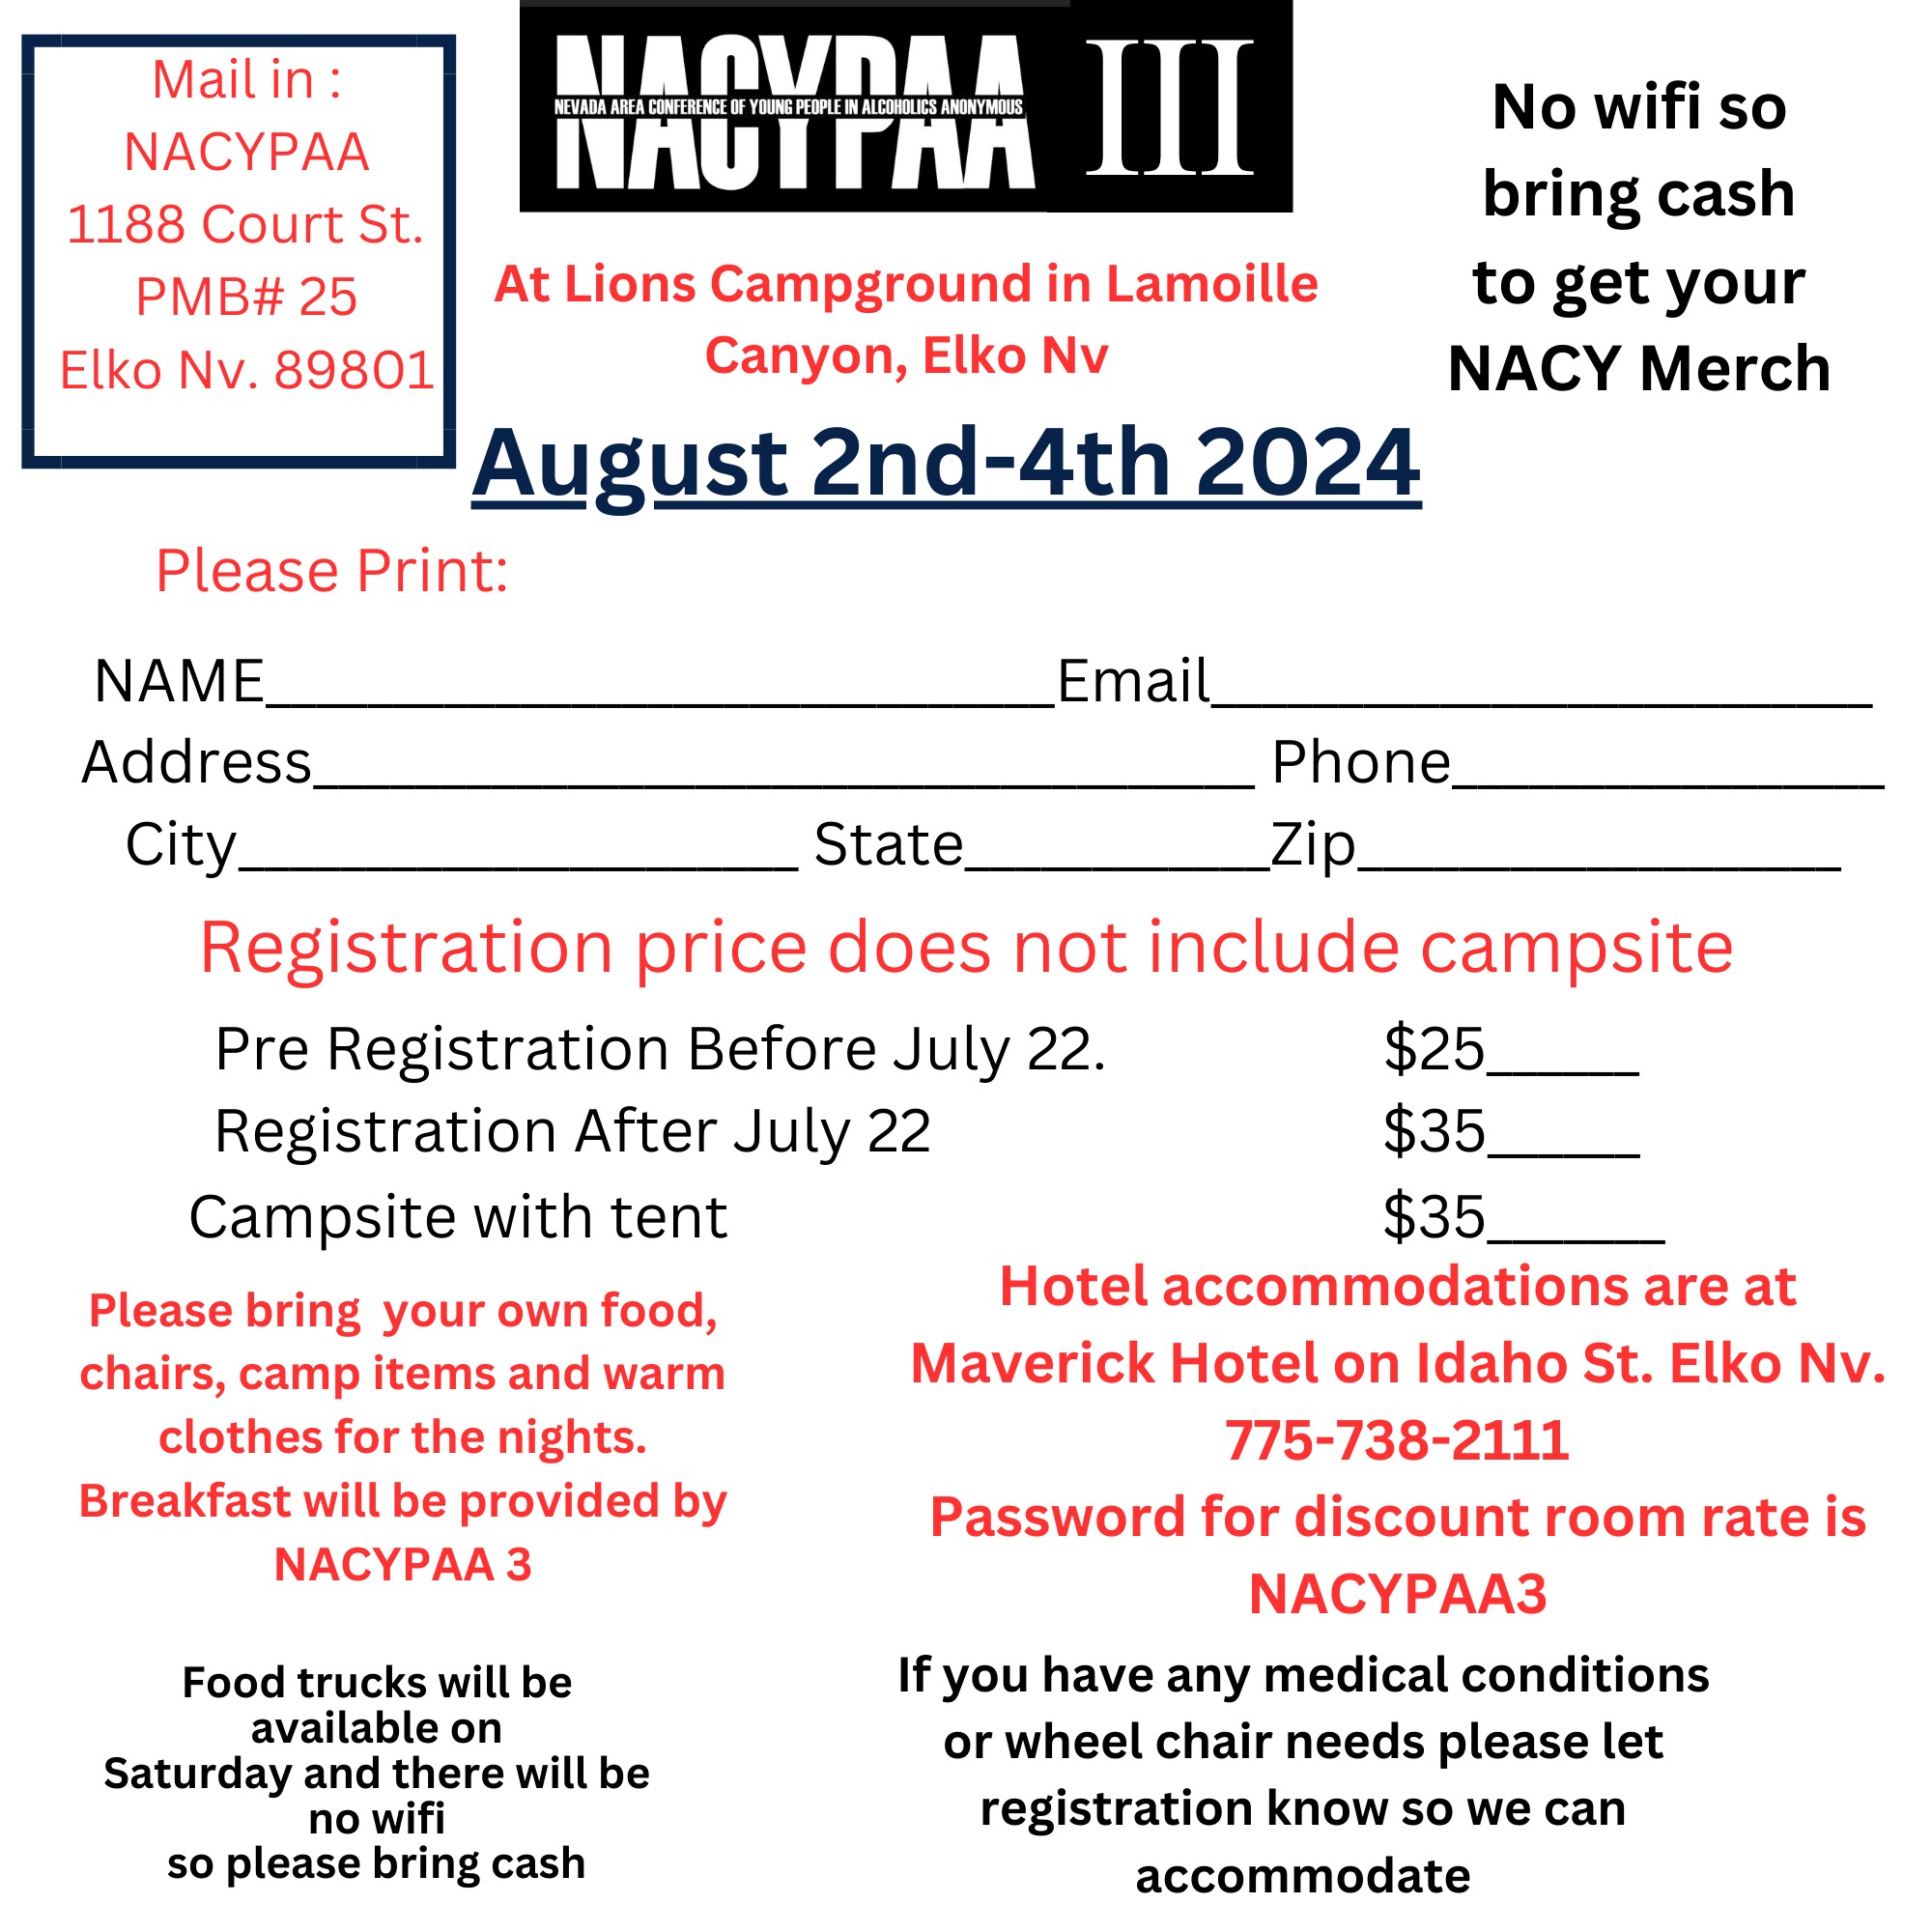 NACYPAA 3 Registration